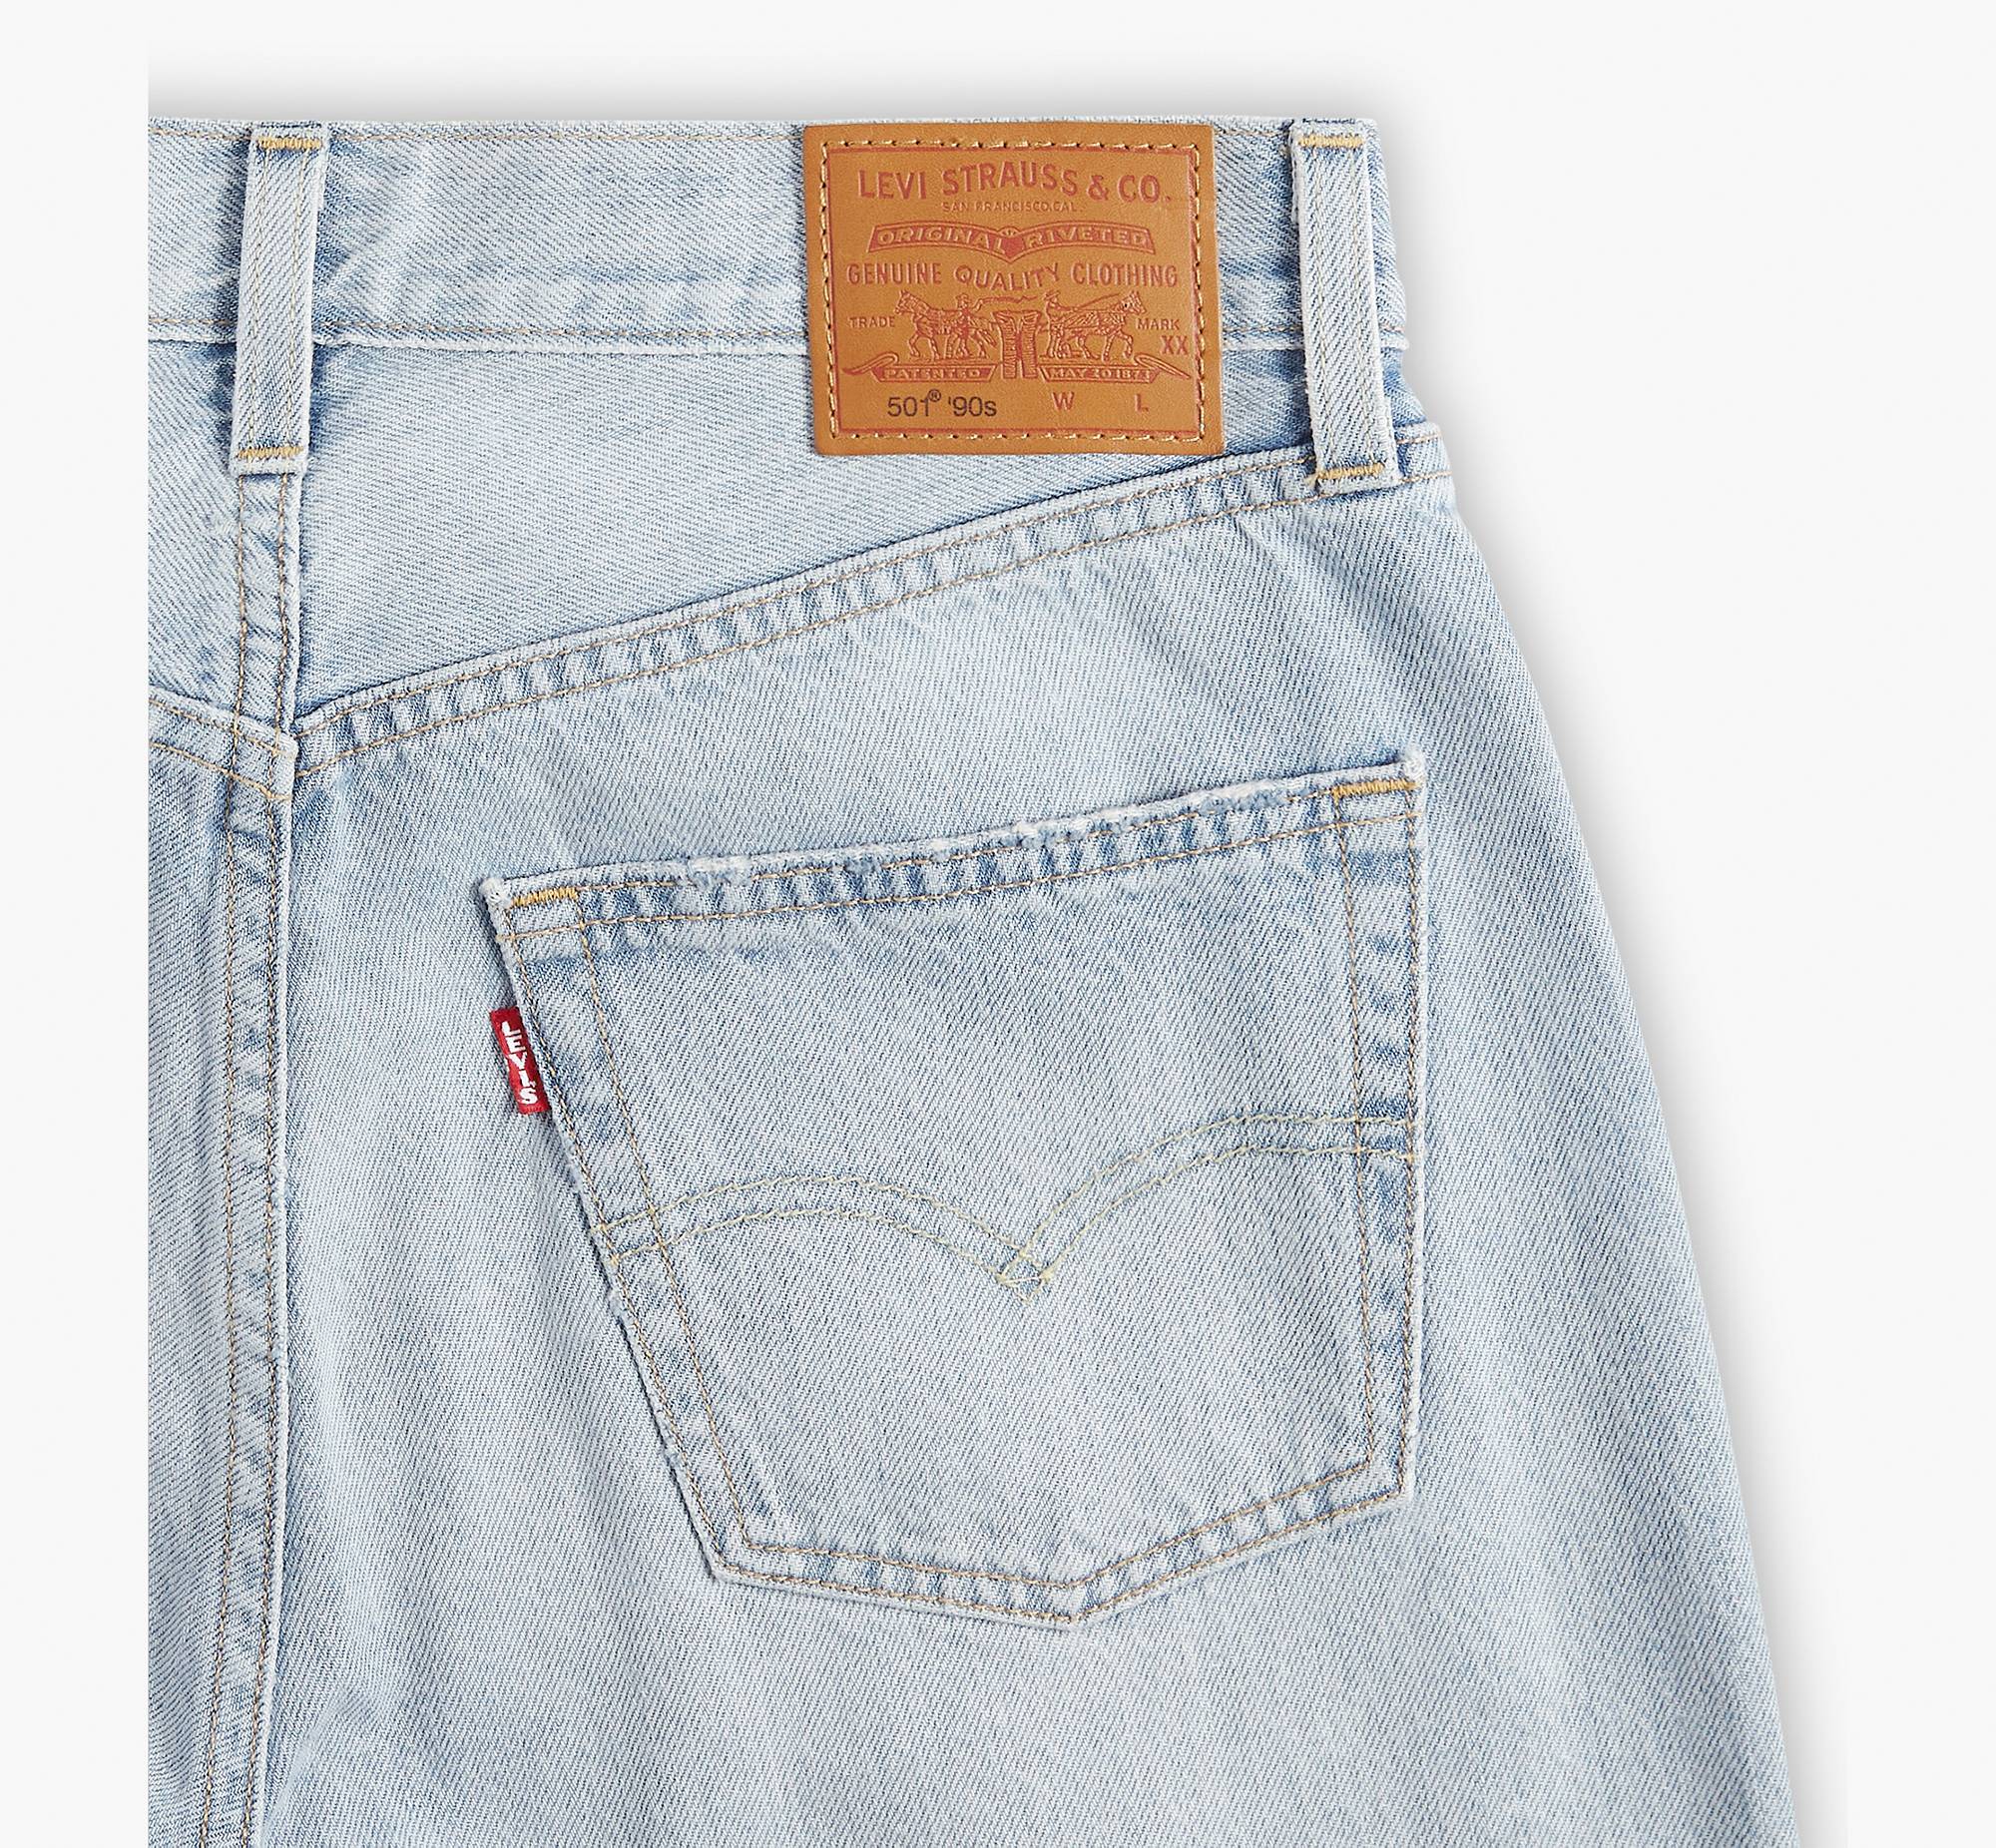 501® 90's Freehand Folk Jeans 8